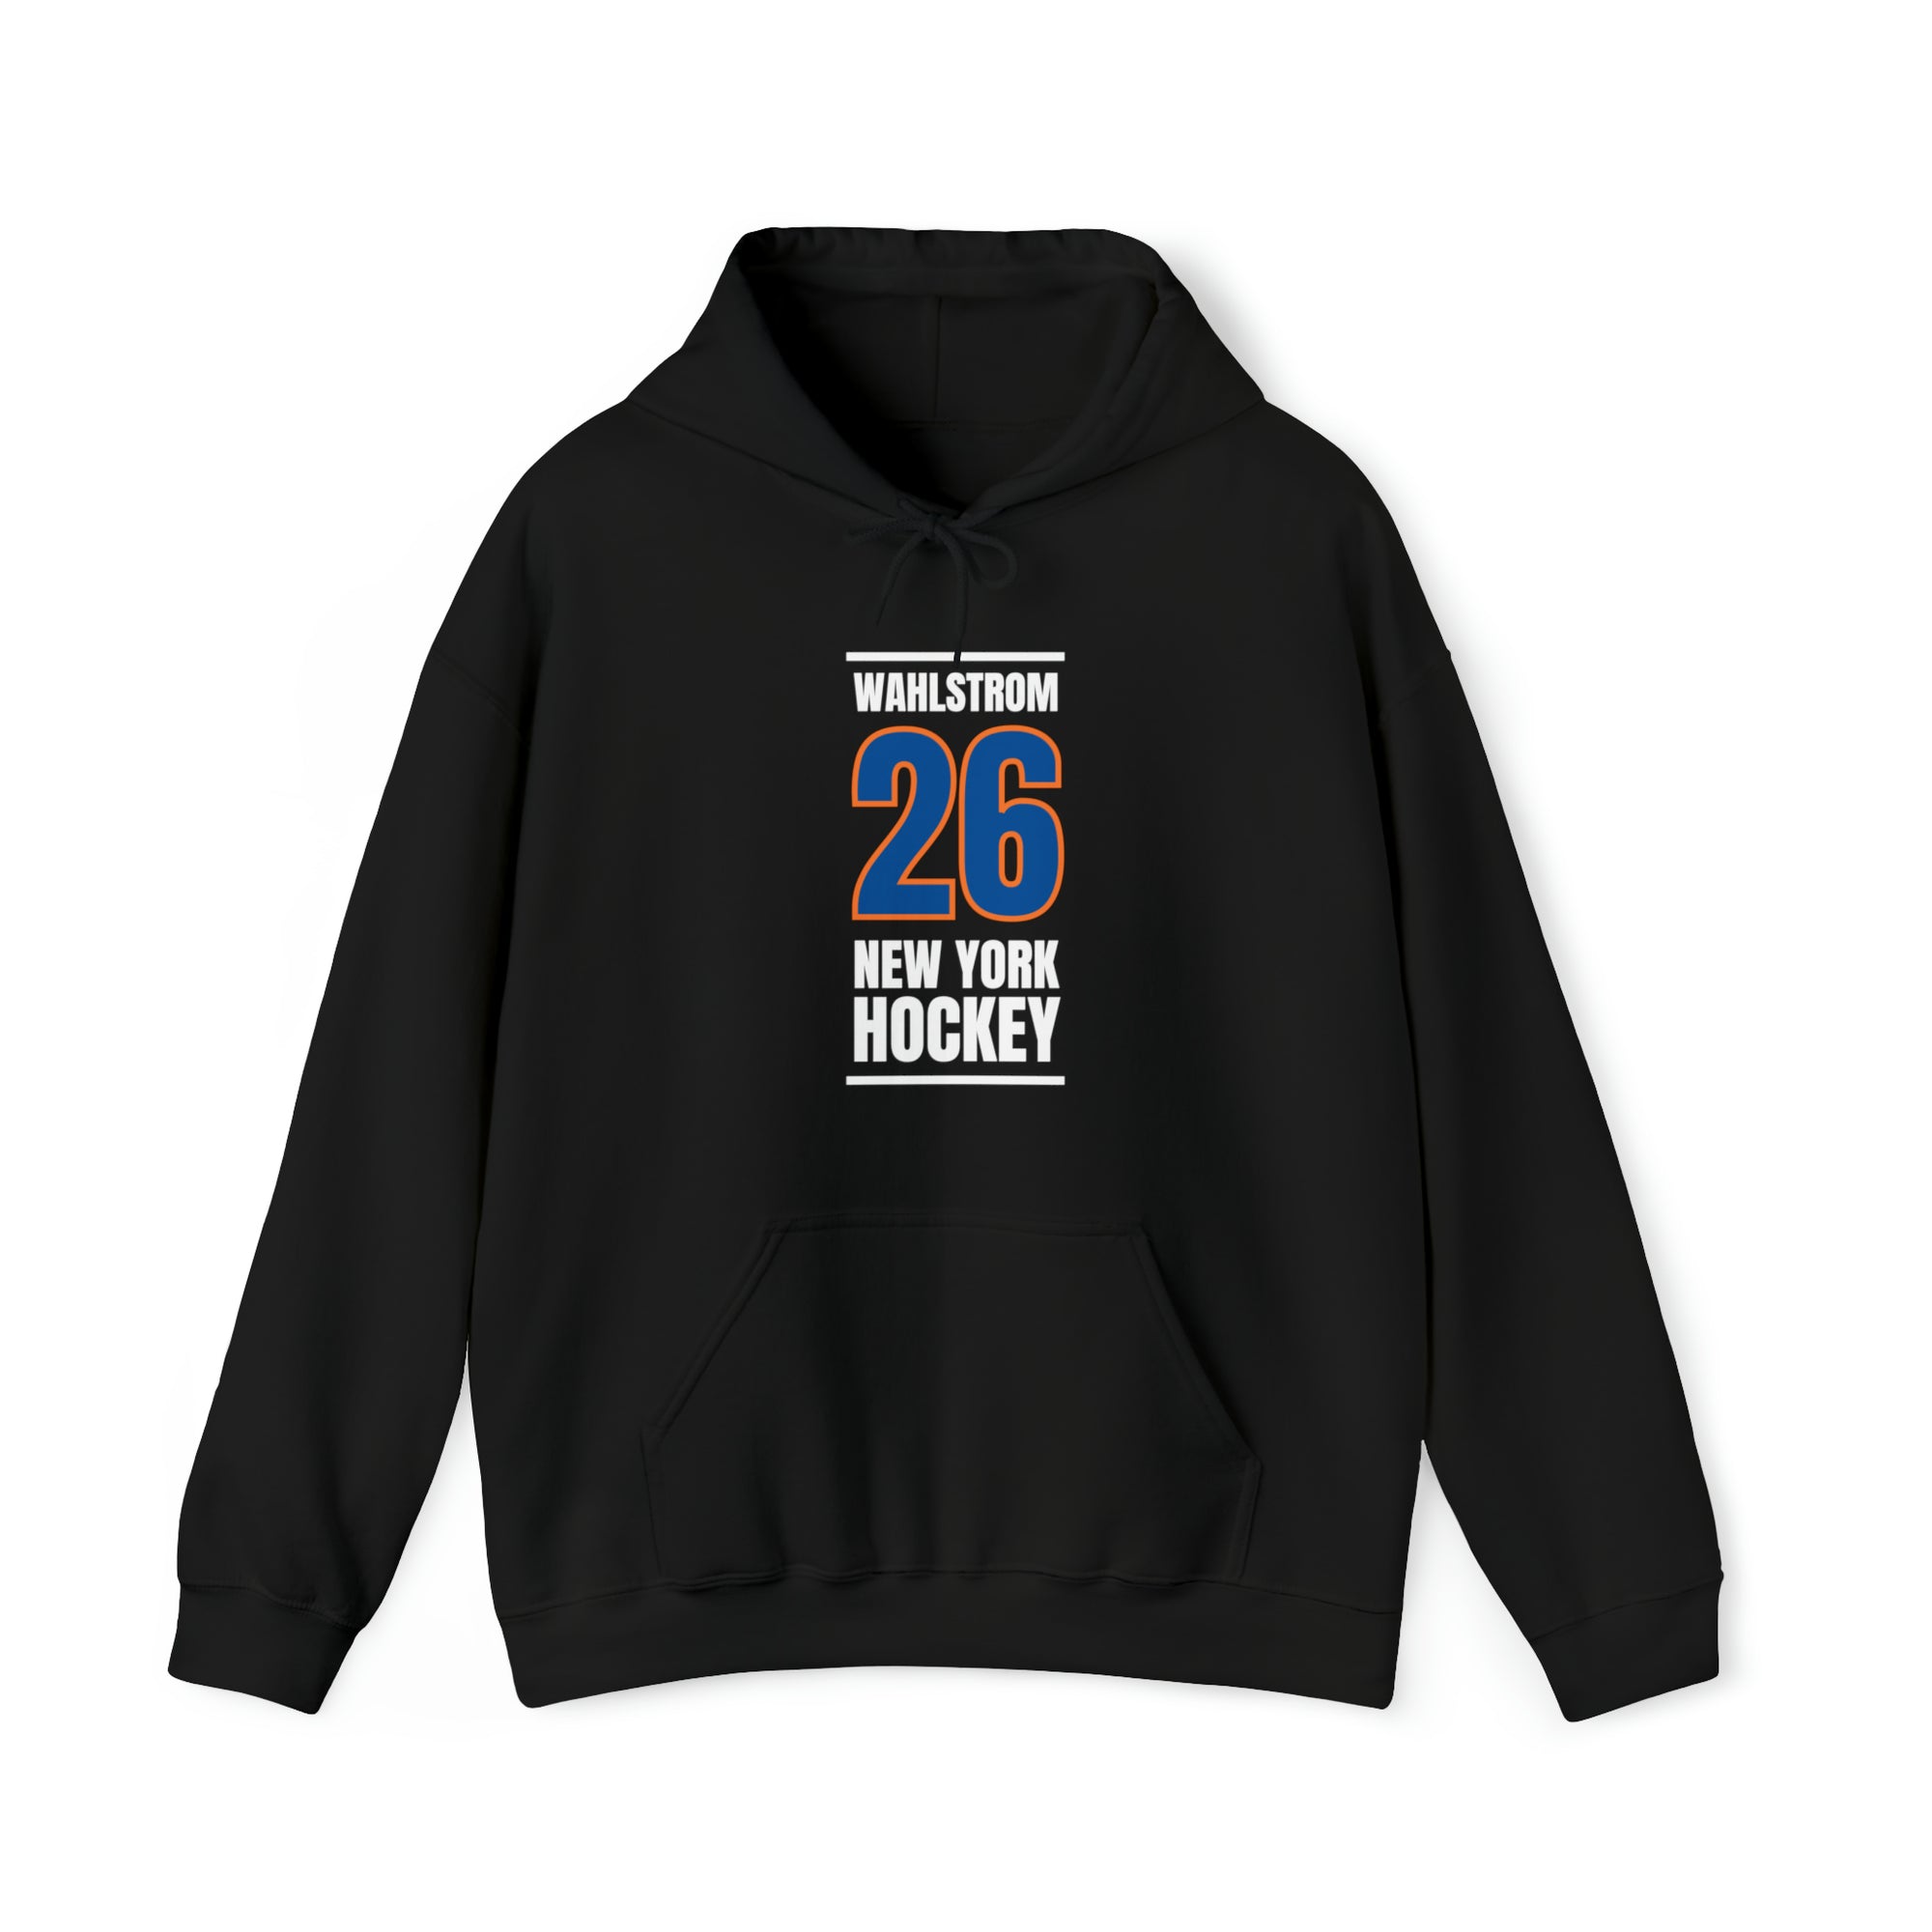 Wahlstrom 26 New York Hockey Blue Vertical Design Unisex Hooded Sweatshirt